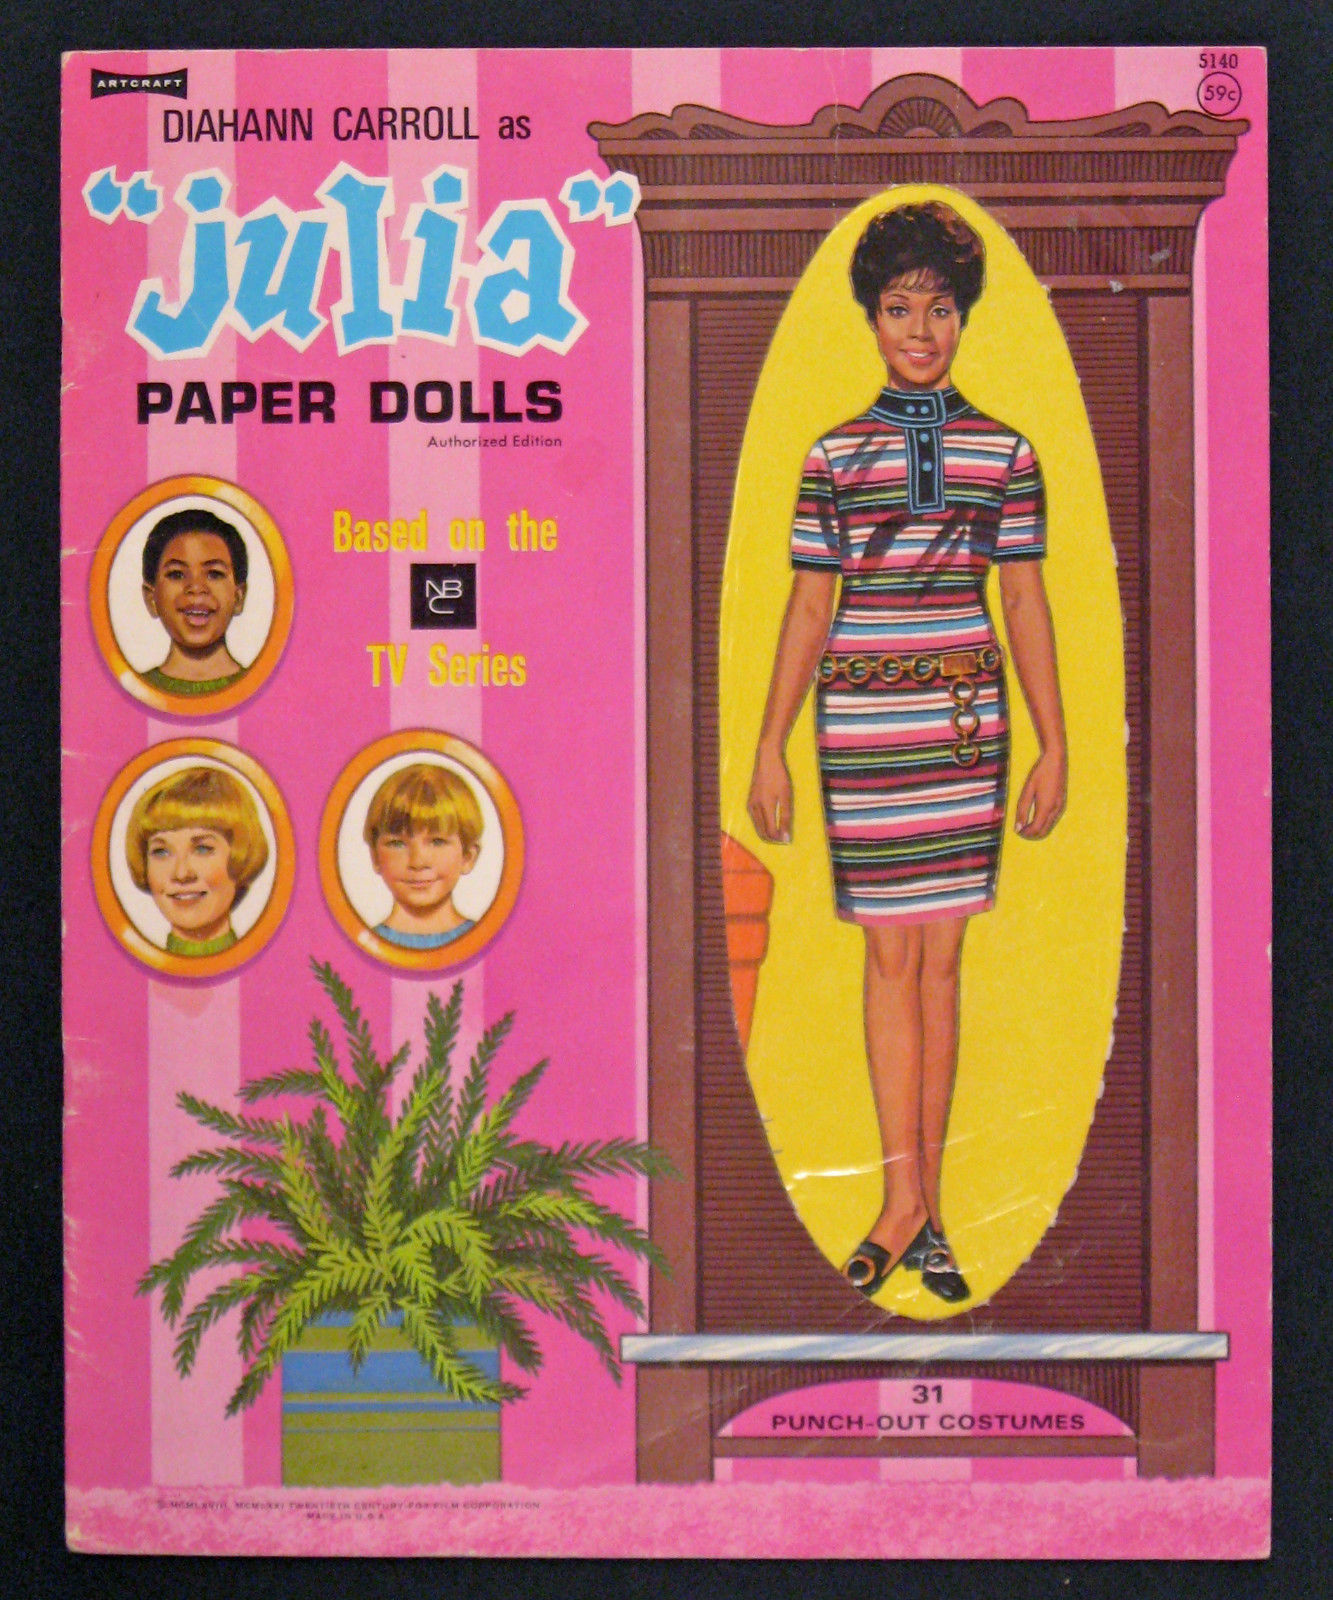 DIAHANN CARROLL AS "JULIA" 1968, 1971 ARTCRAFT UNCUT PAPER DOLLS VINTAGE